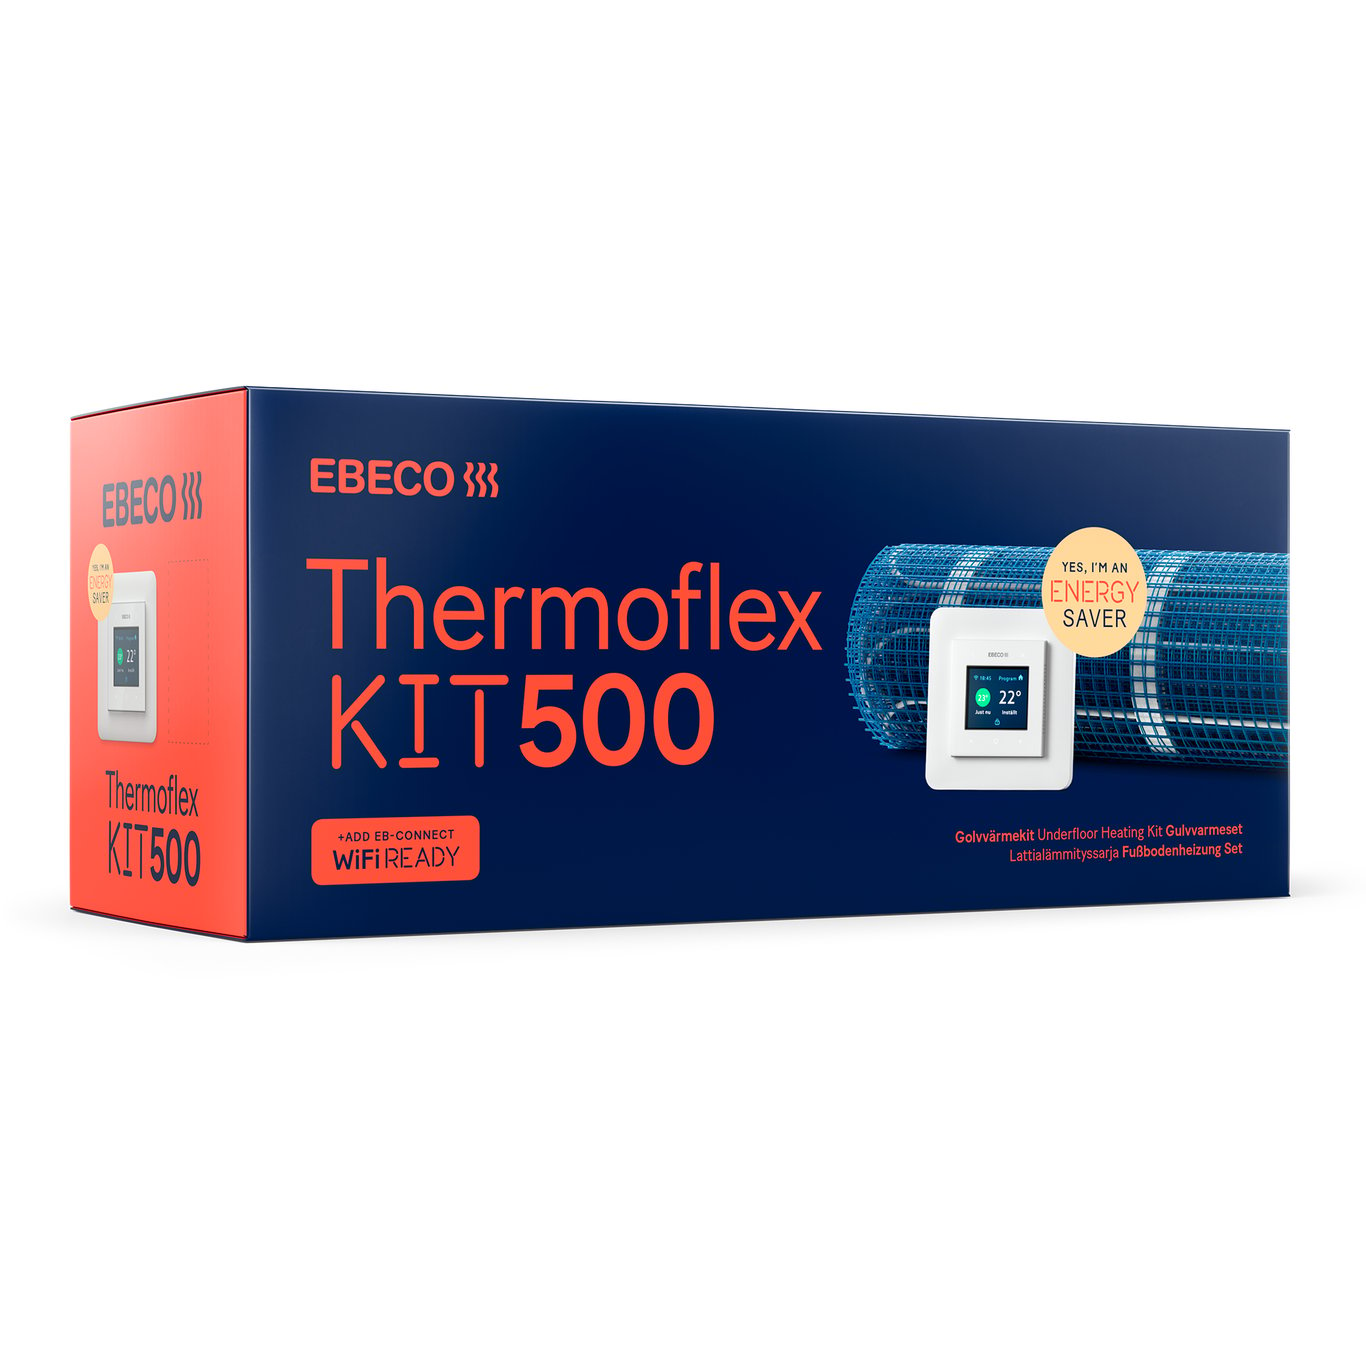 EBECO THERMOFLEX KIT 500 2,7M2 340W